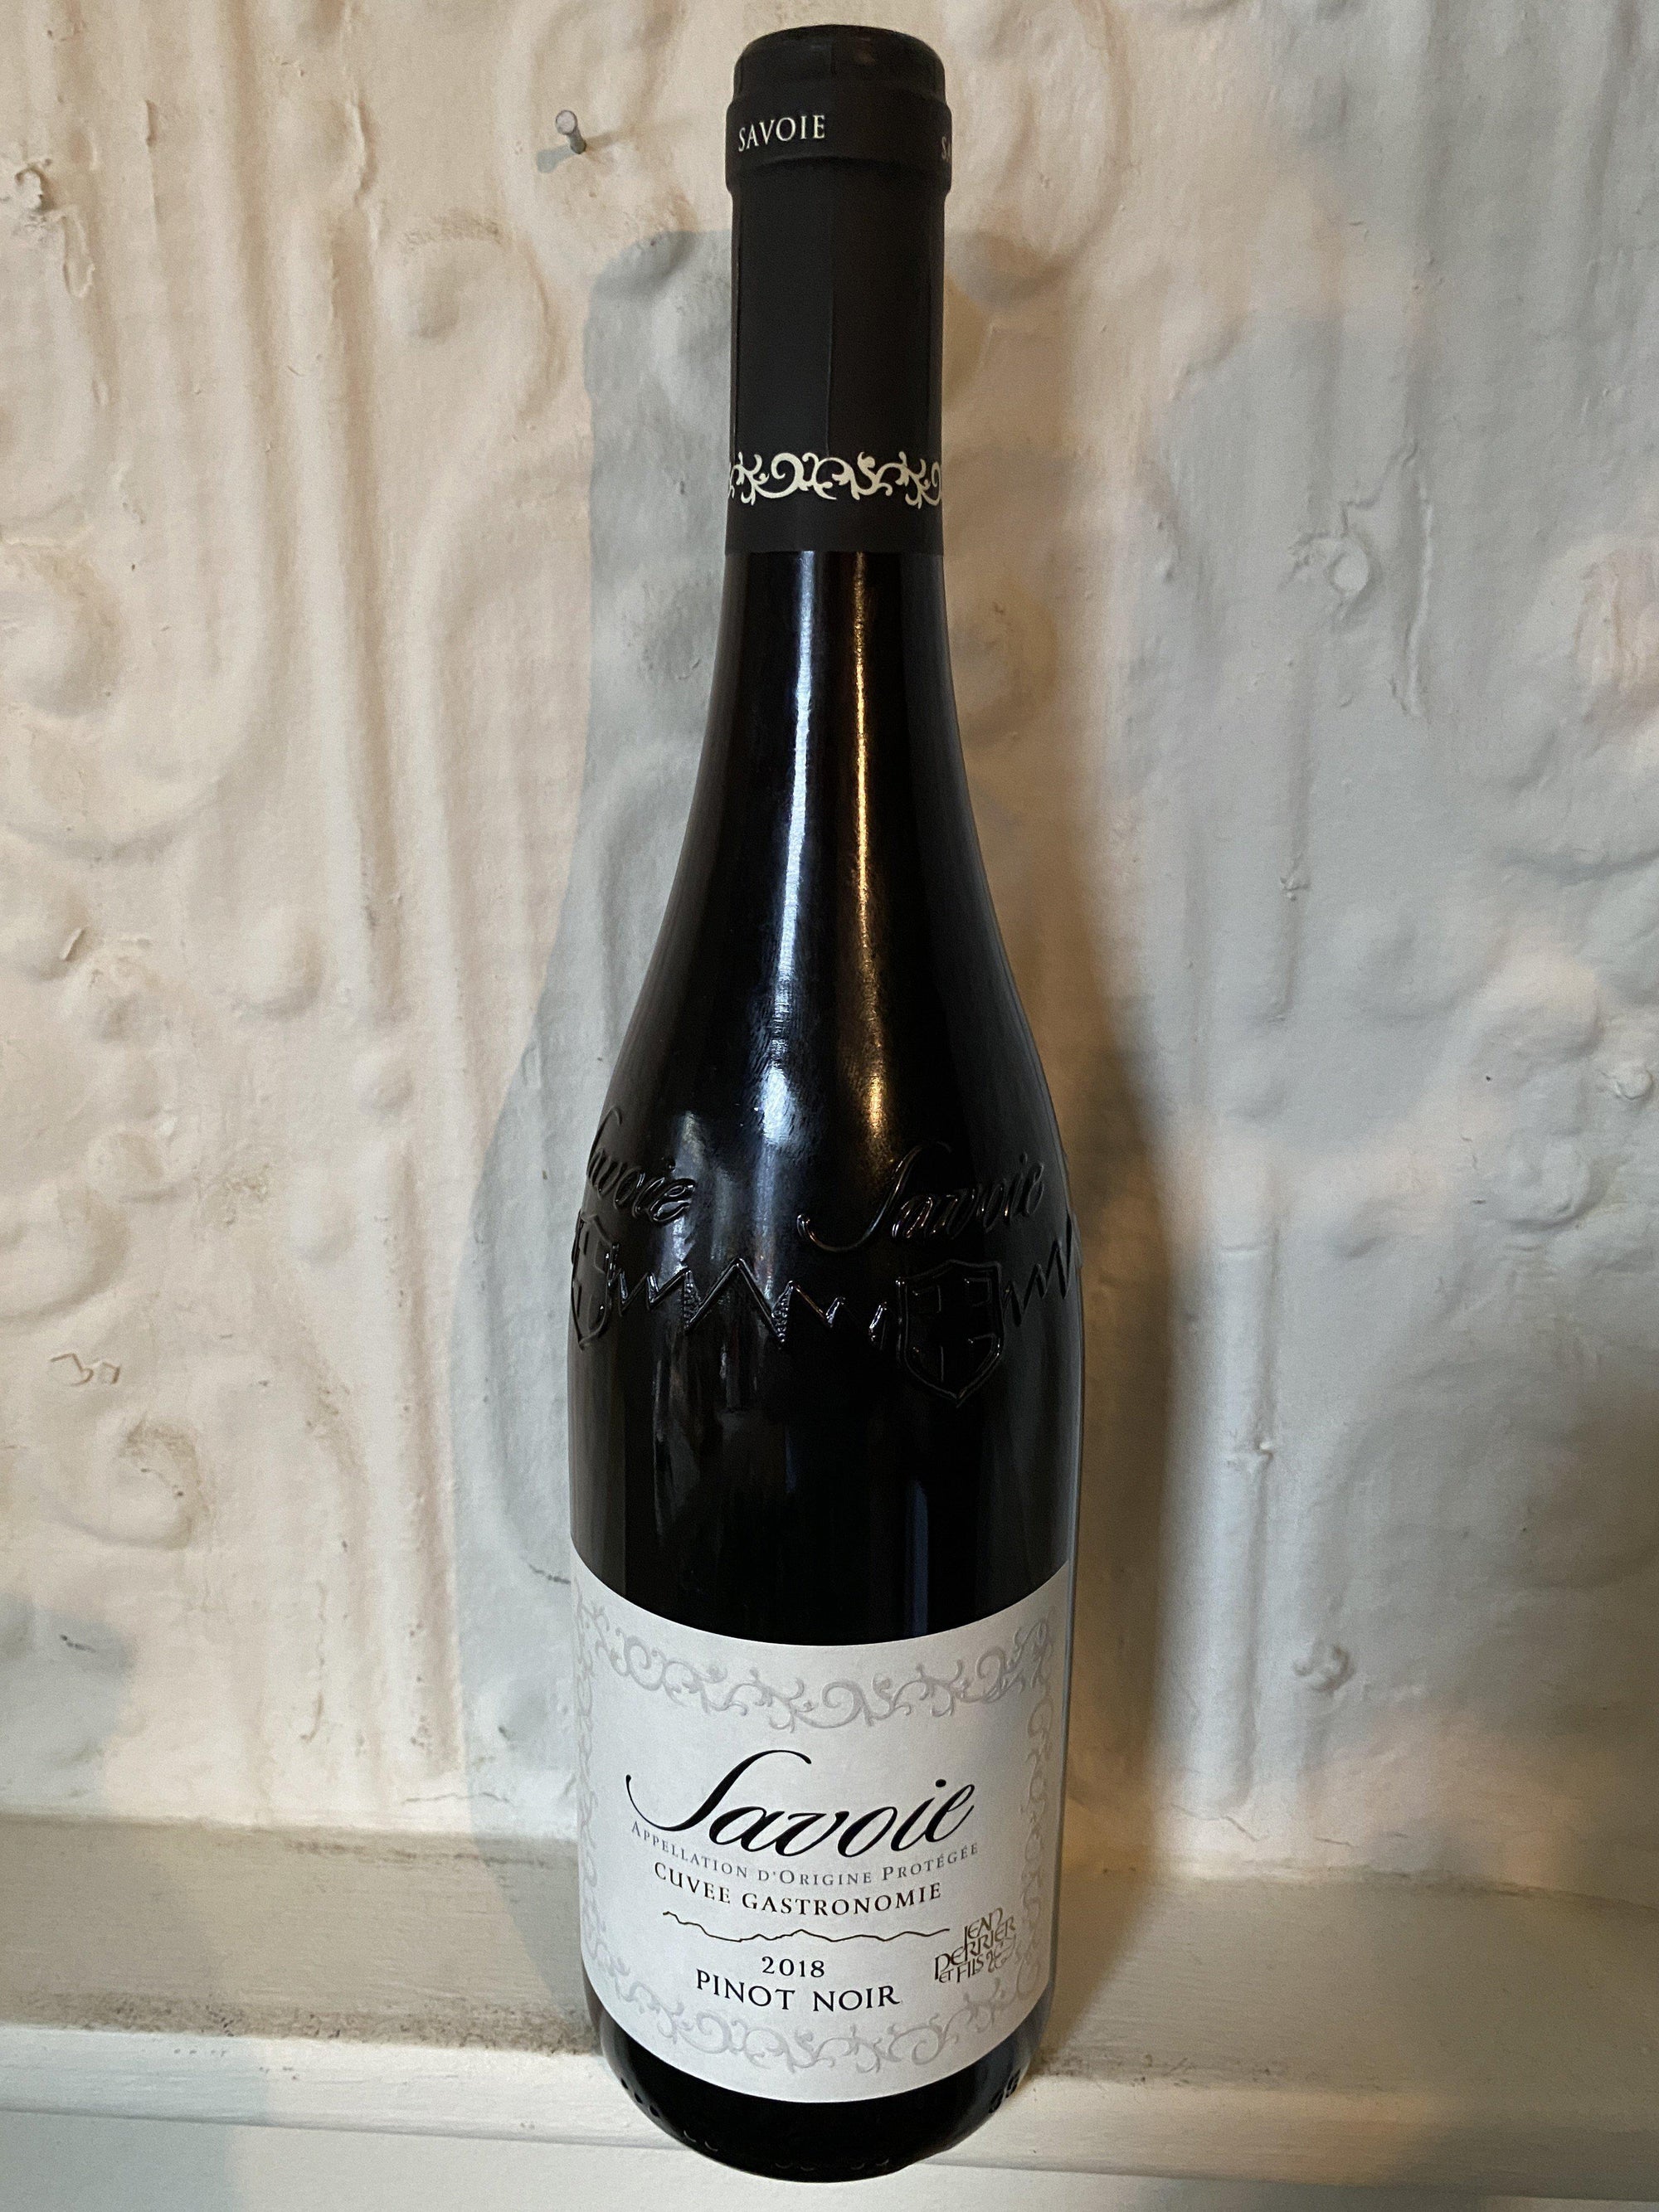 Pinot Noir "Cuvee Gastronomie", Jean Perrier et Fils 2018 (Savoy, France)-Wine-Bibber & Bell